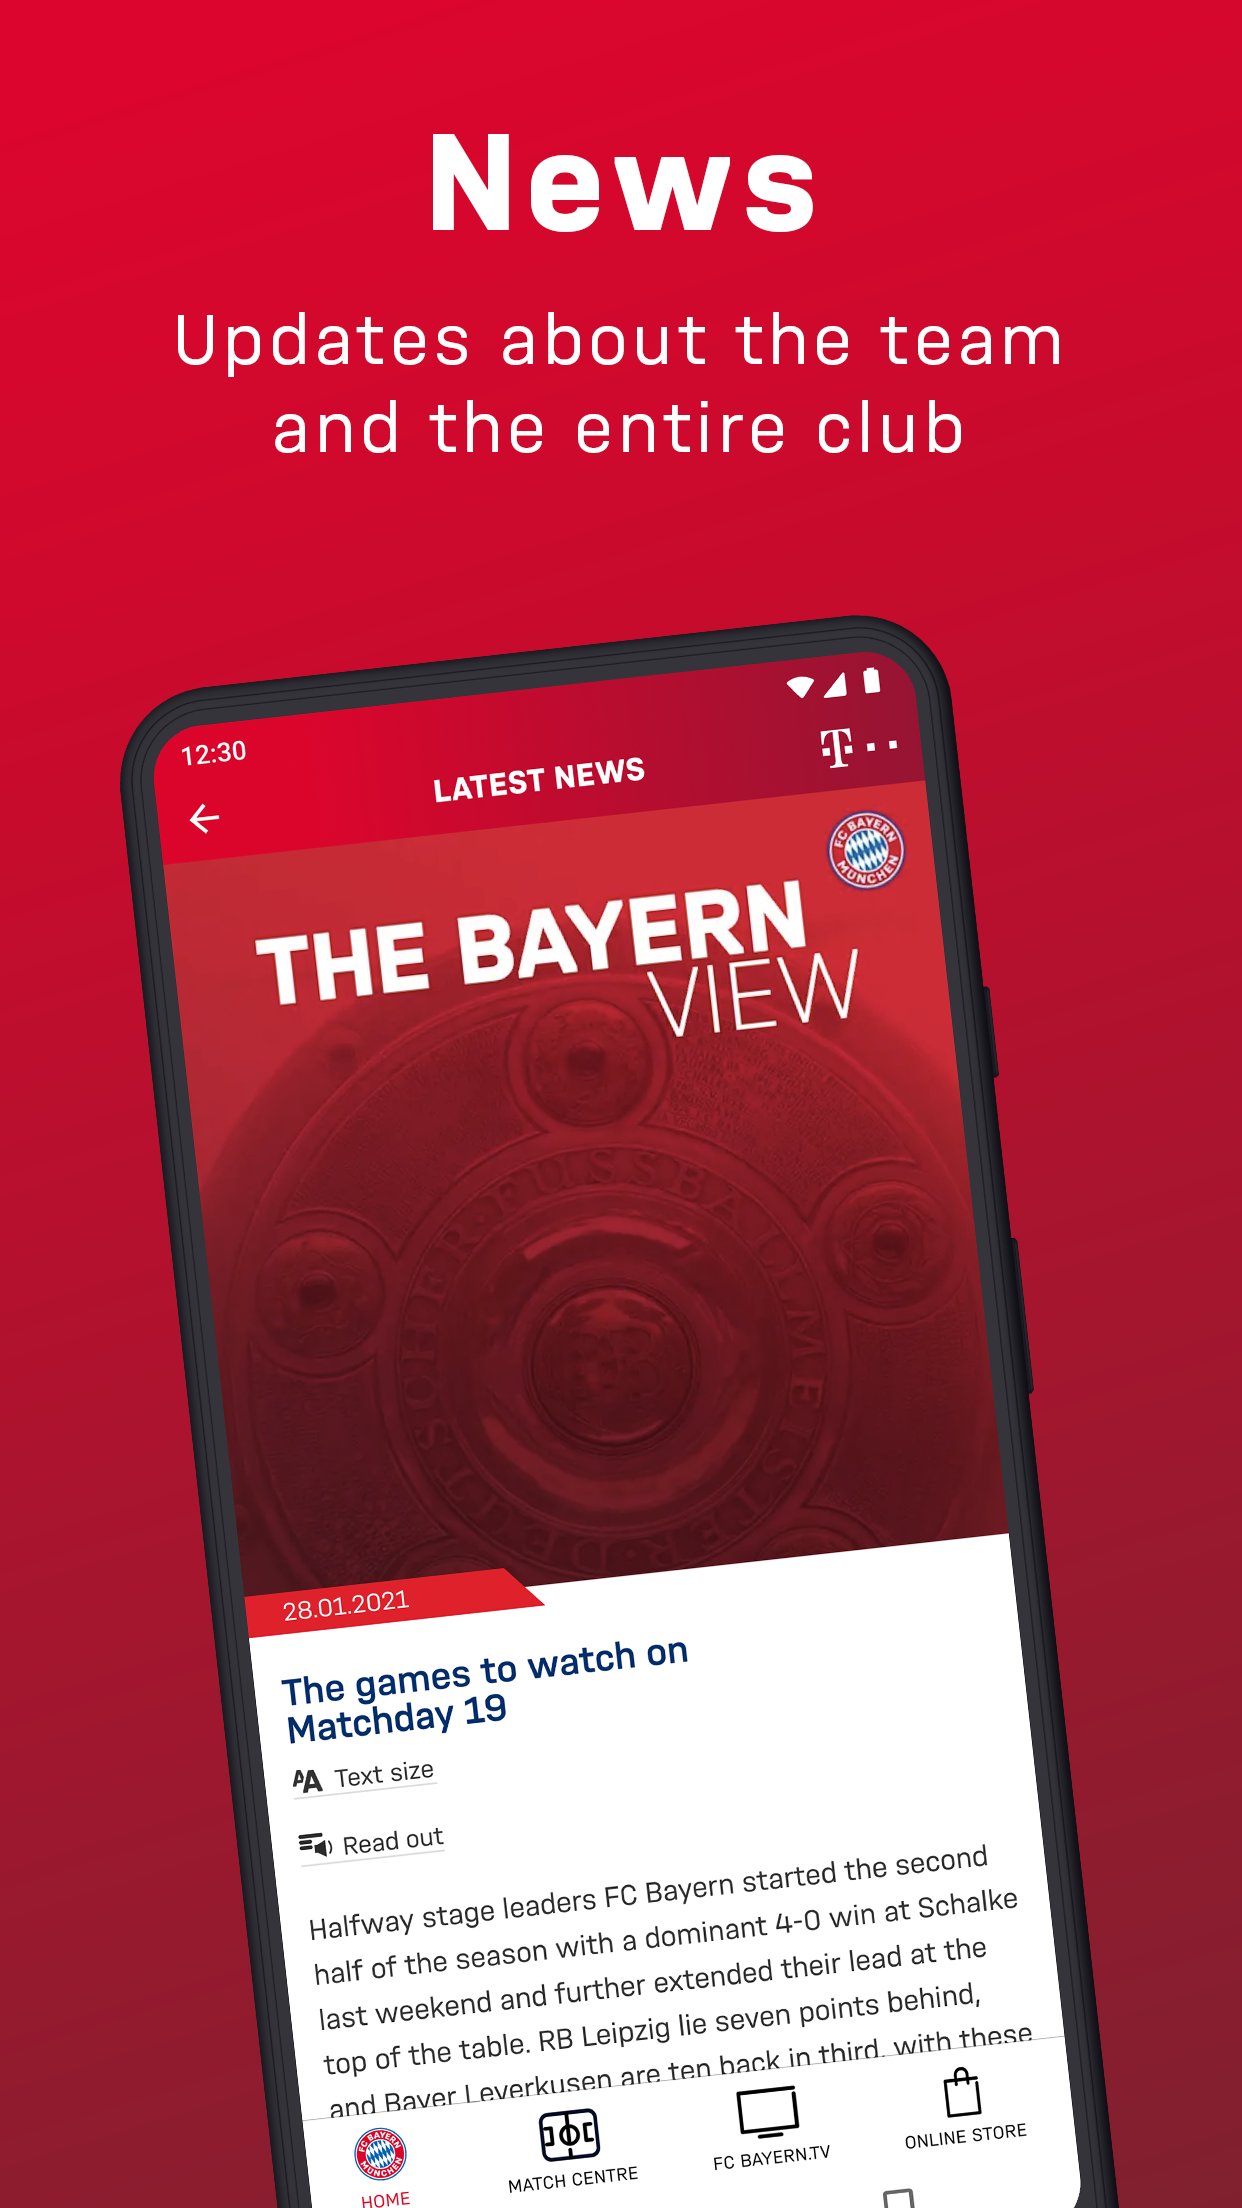 Android application FC Bayern München – news screenshort